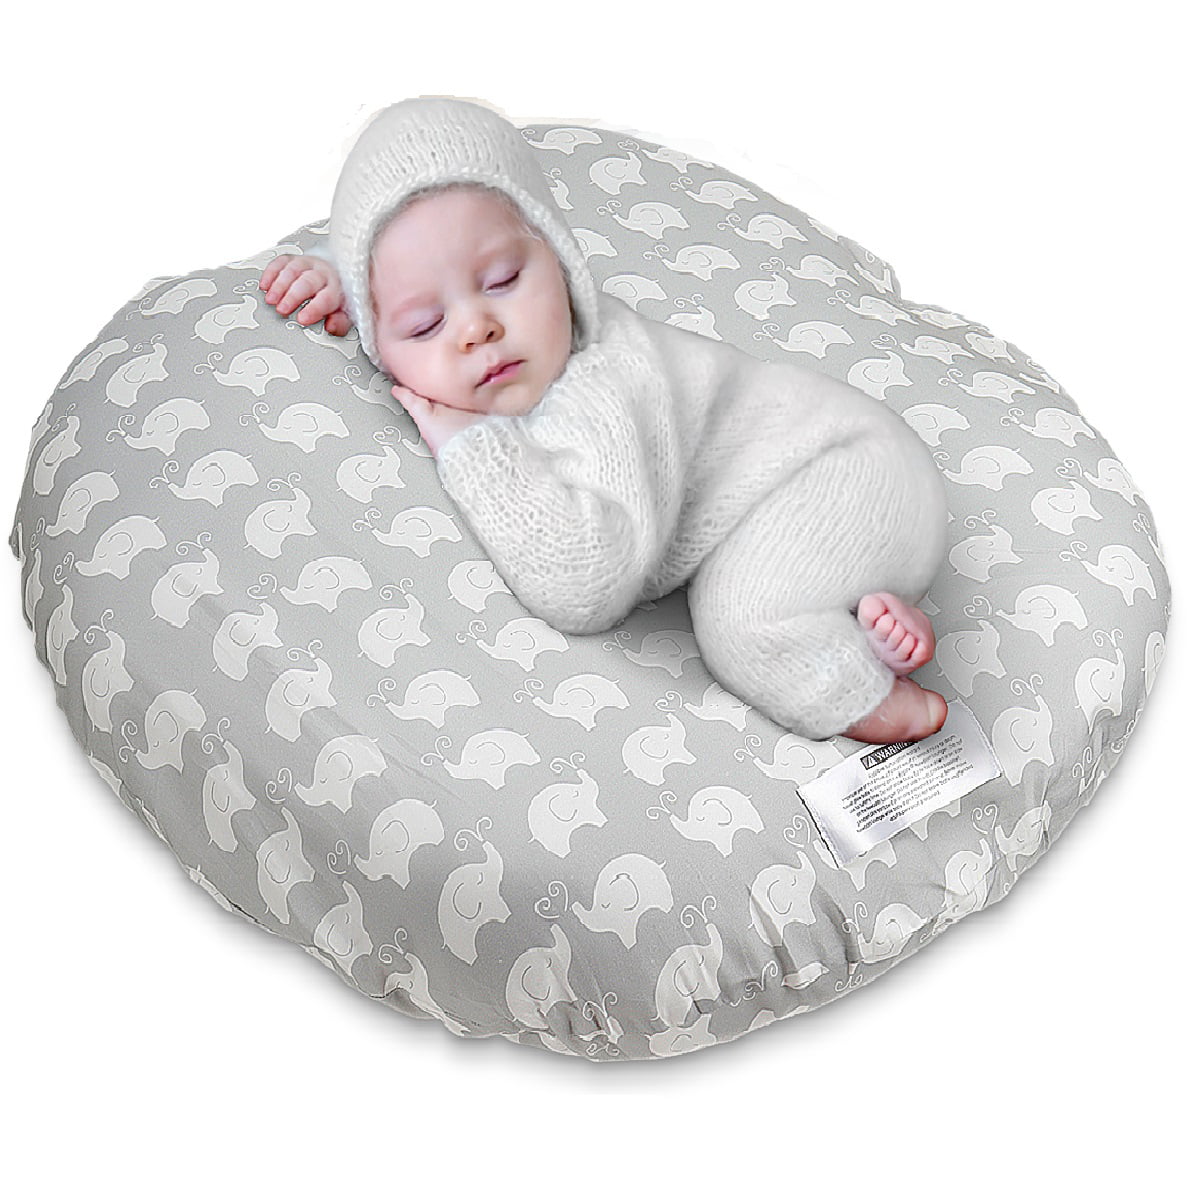 Baby pillow a portable newborn lounger pillow baby good sleep design for baby 